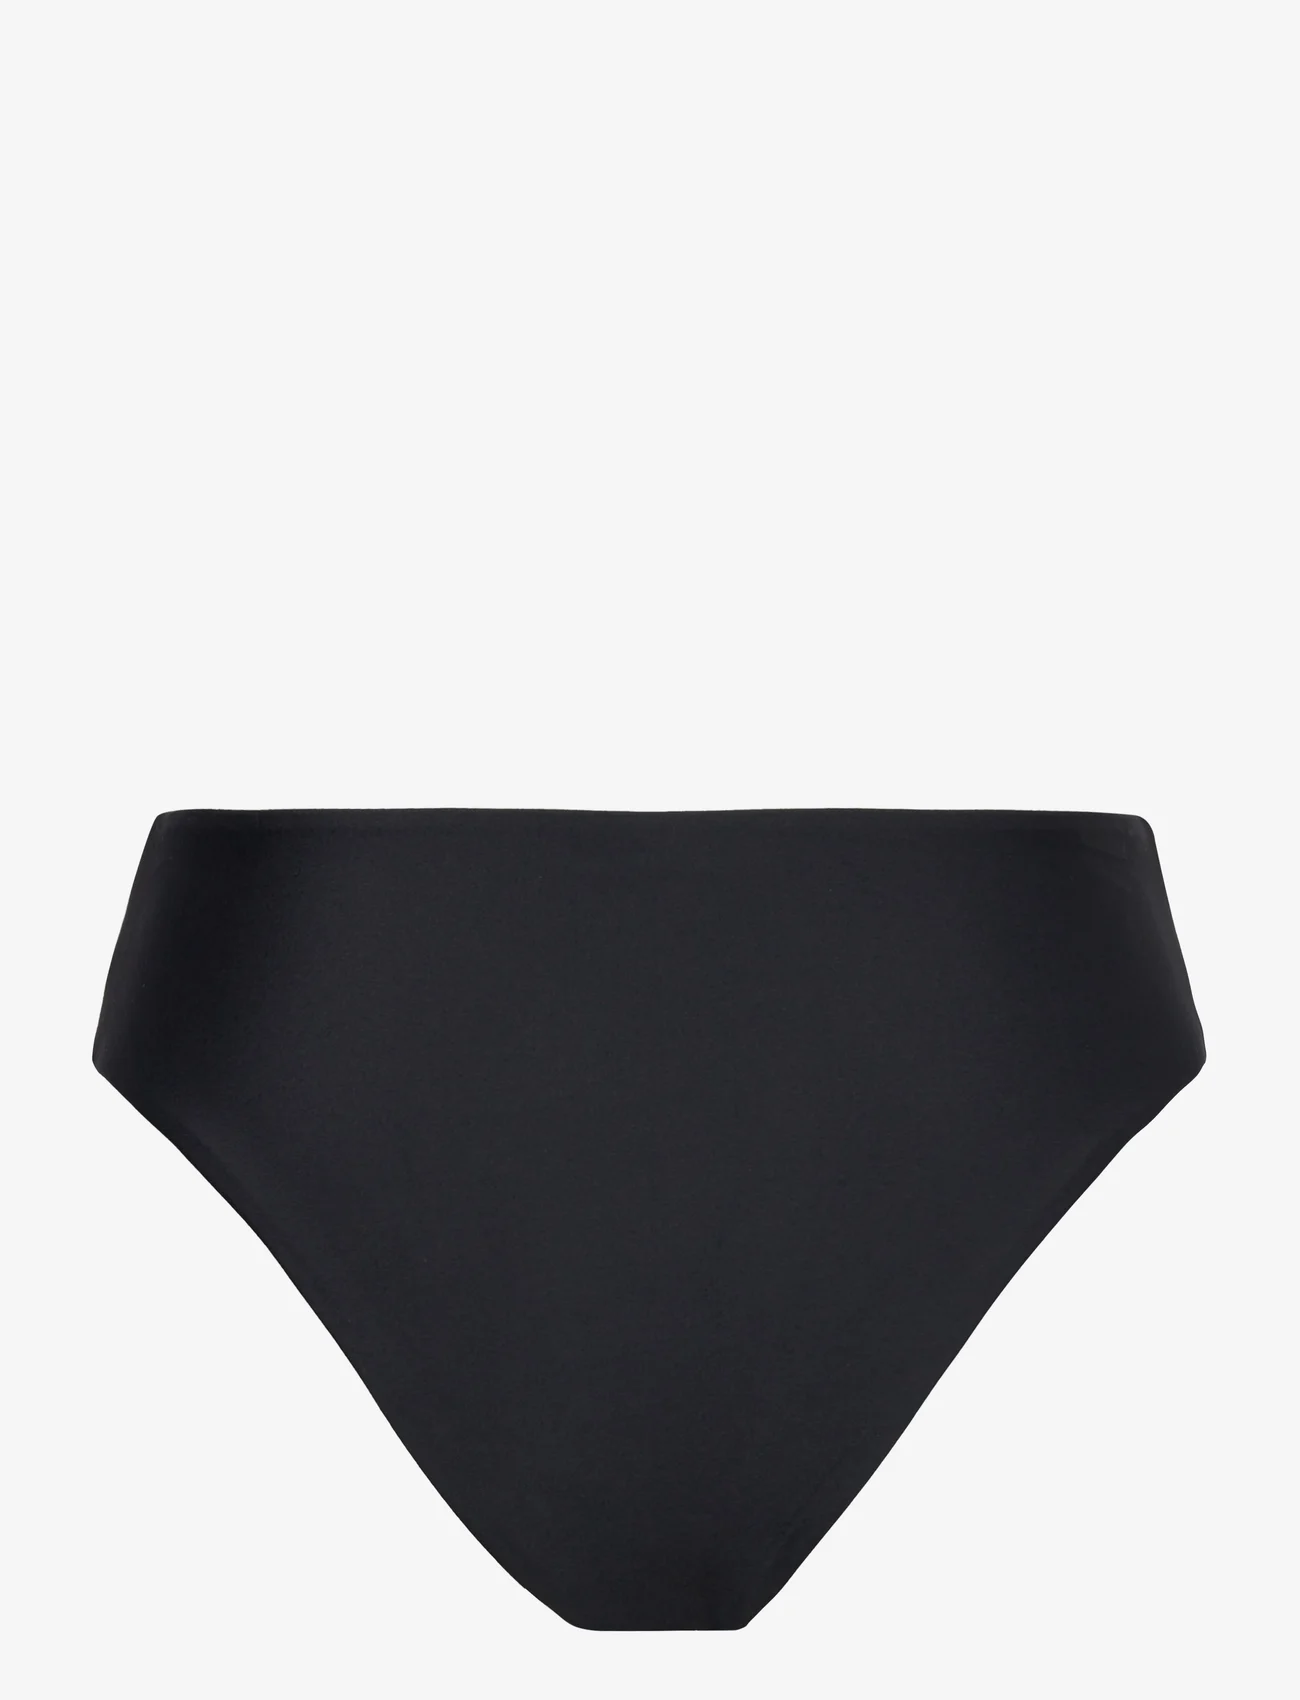 Seafolly - Palm Paradise High Rise Pant - high waist bikini bottoms - black - 1